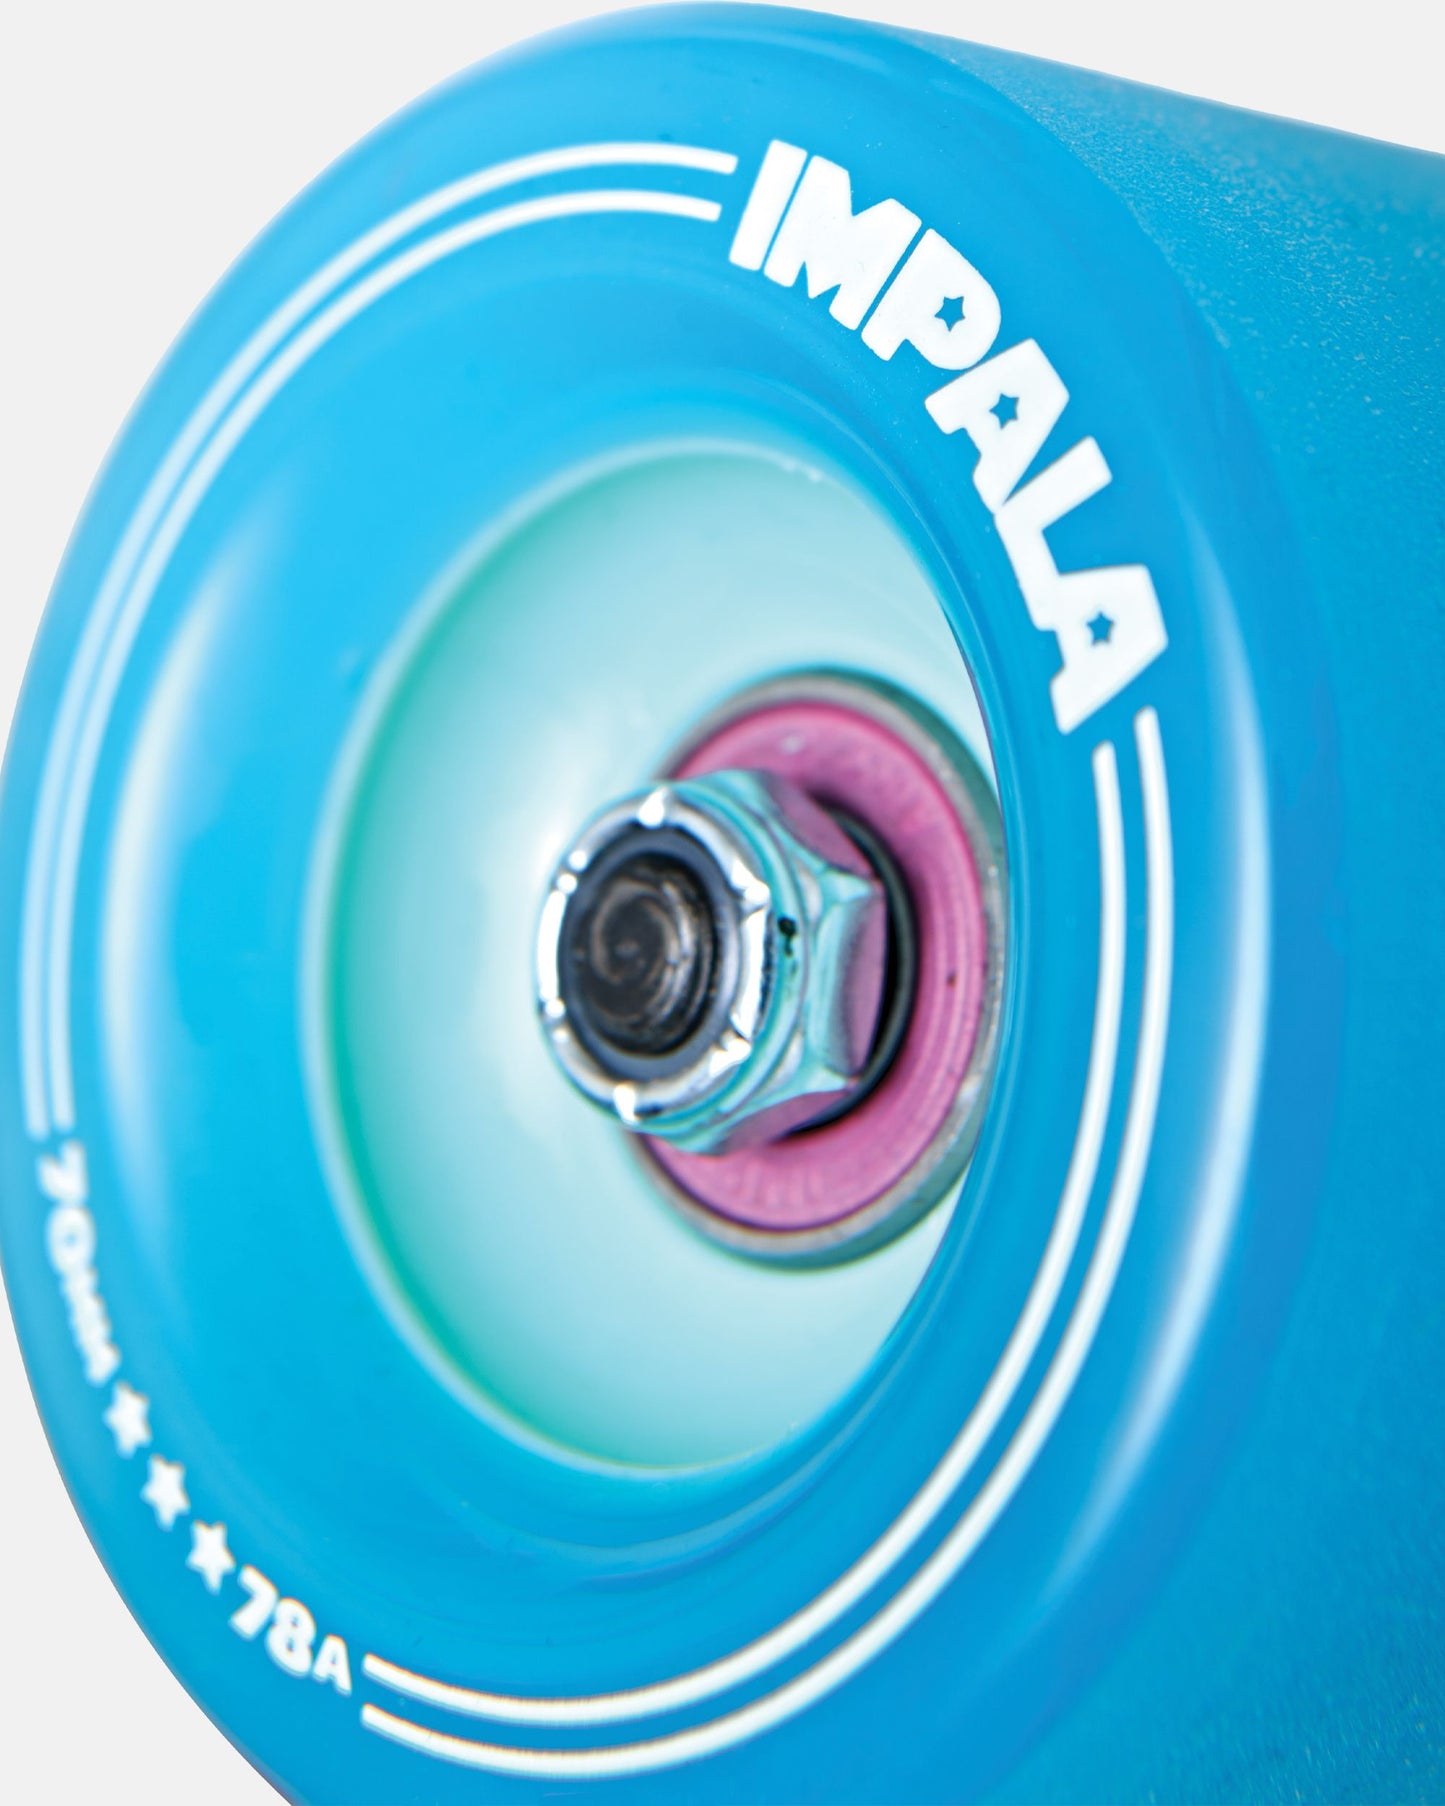 Wheel and bearing detailing of Impala Sirena Longboard - Easty Beasty